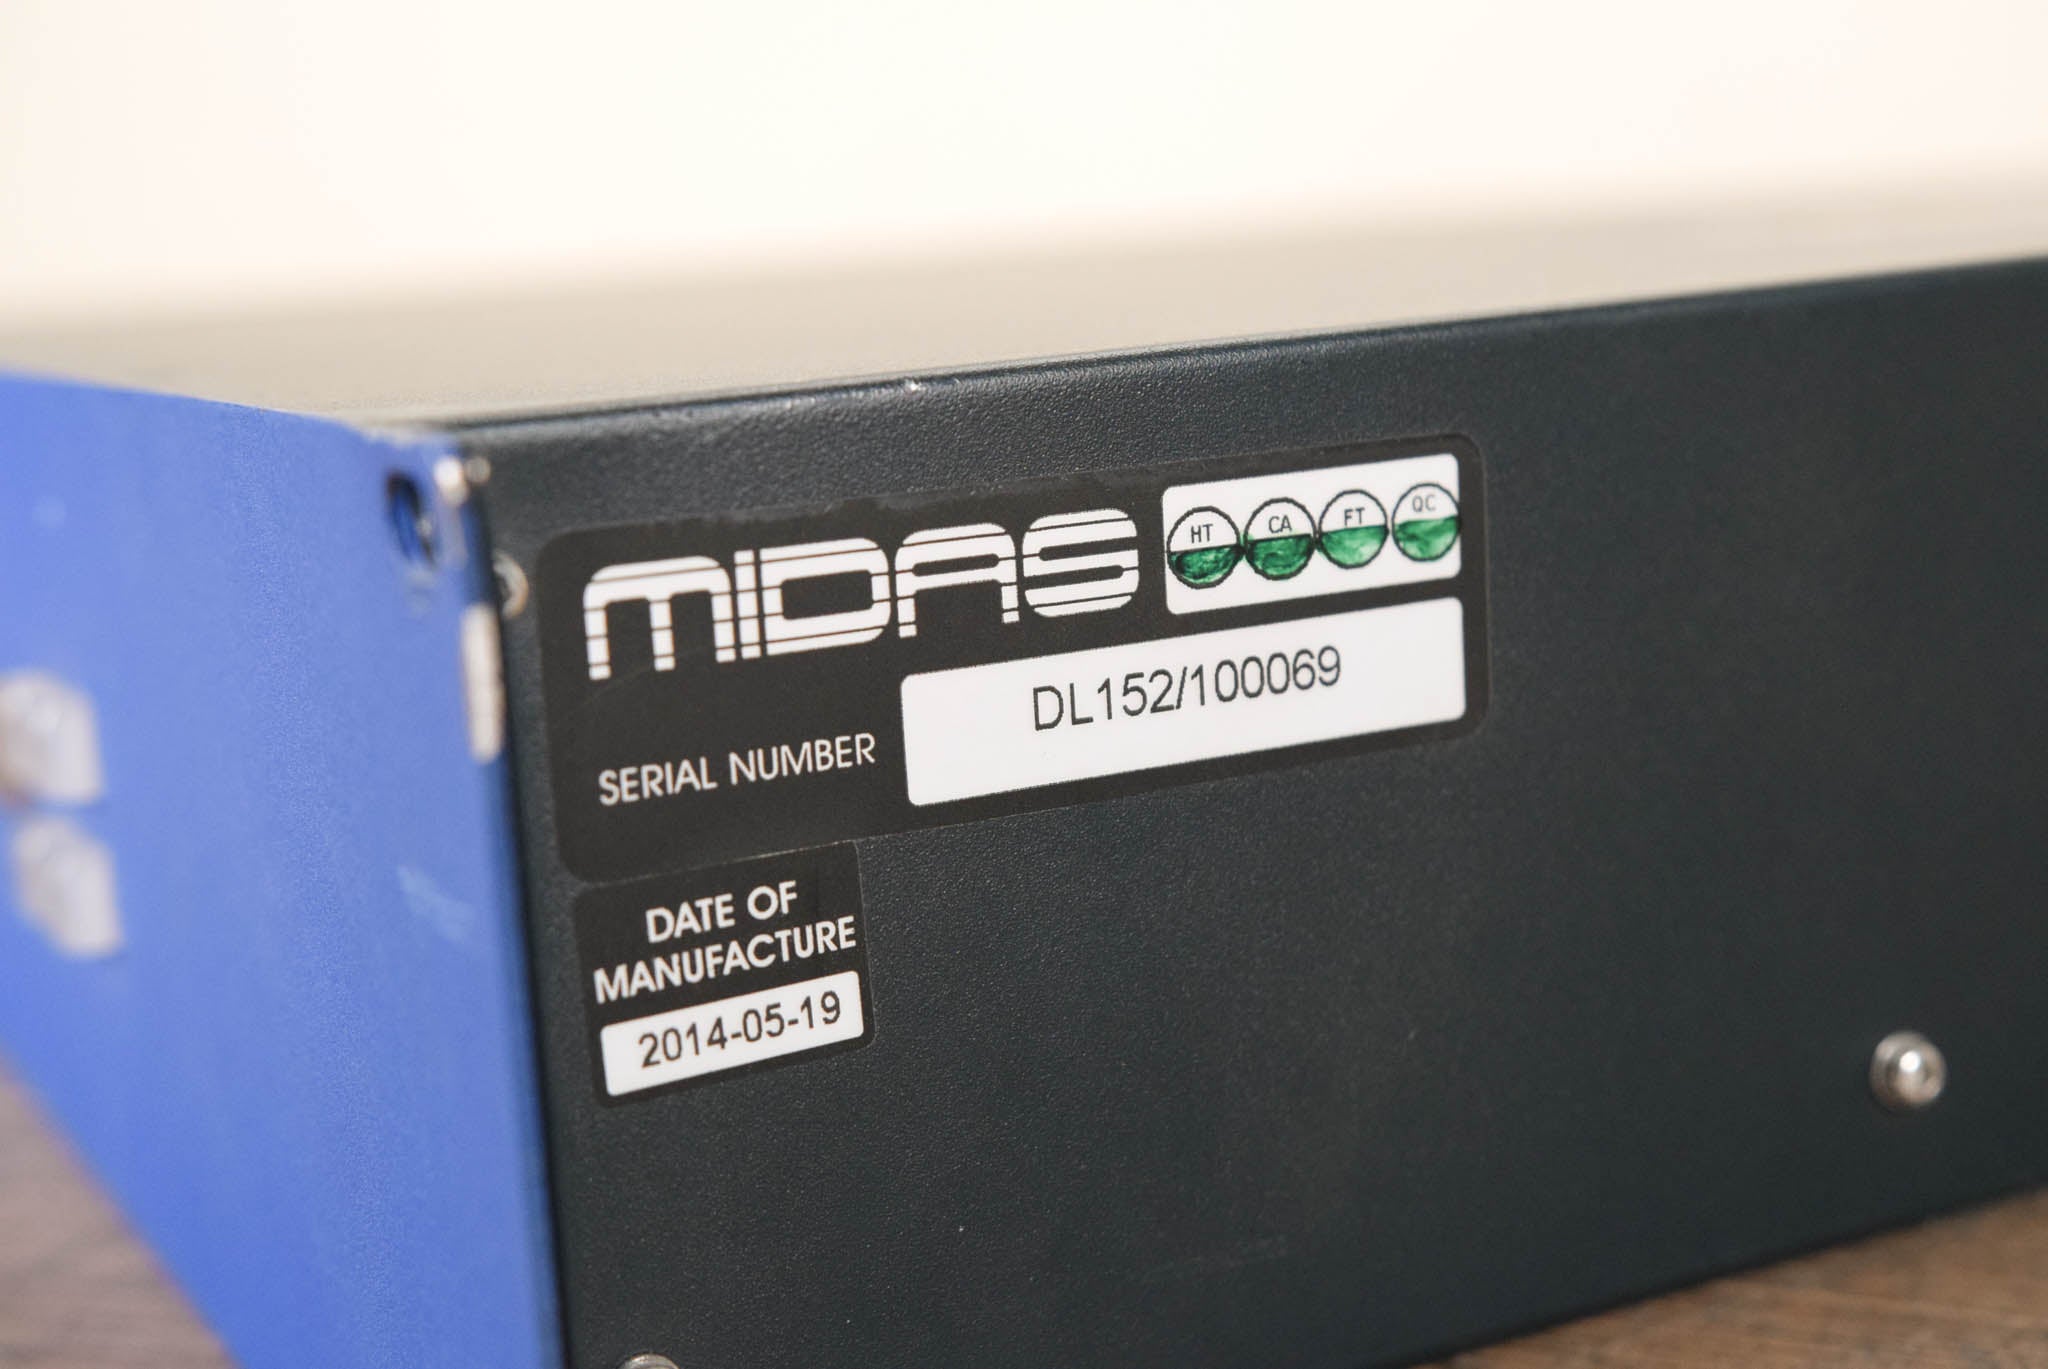 Midas DL152 PRO Series 24-Output Stage Box